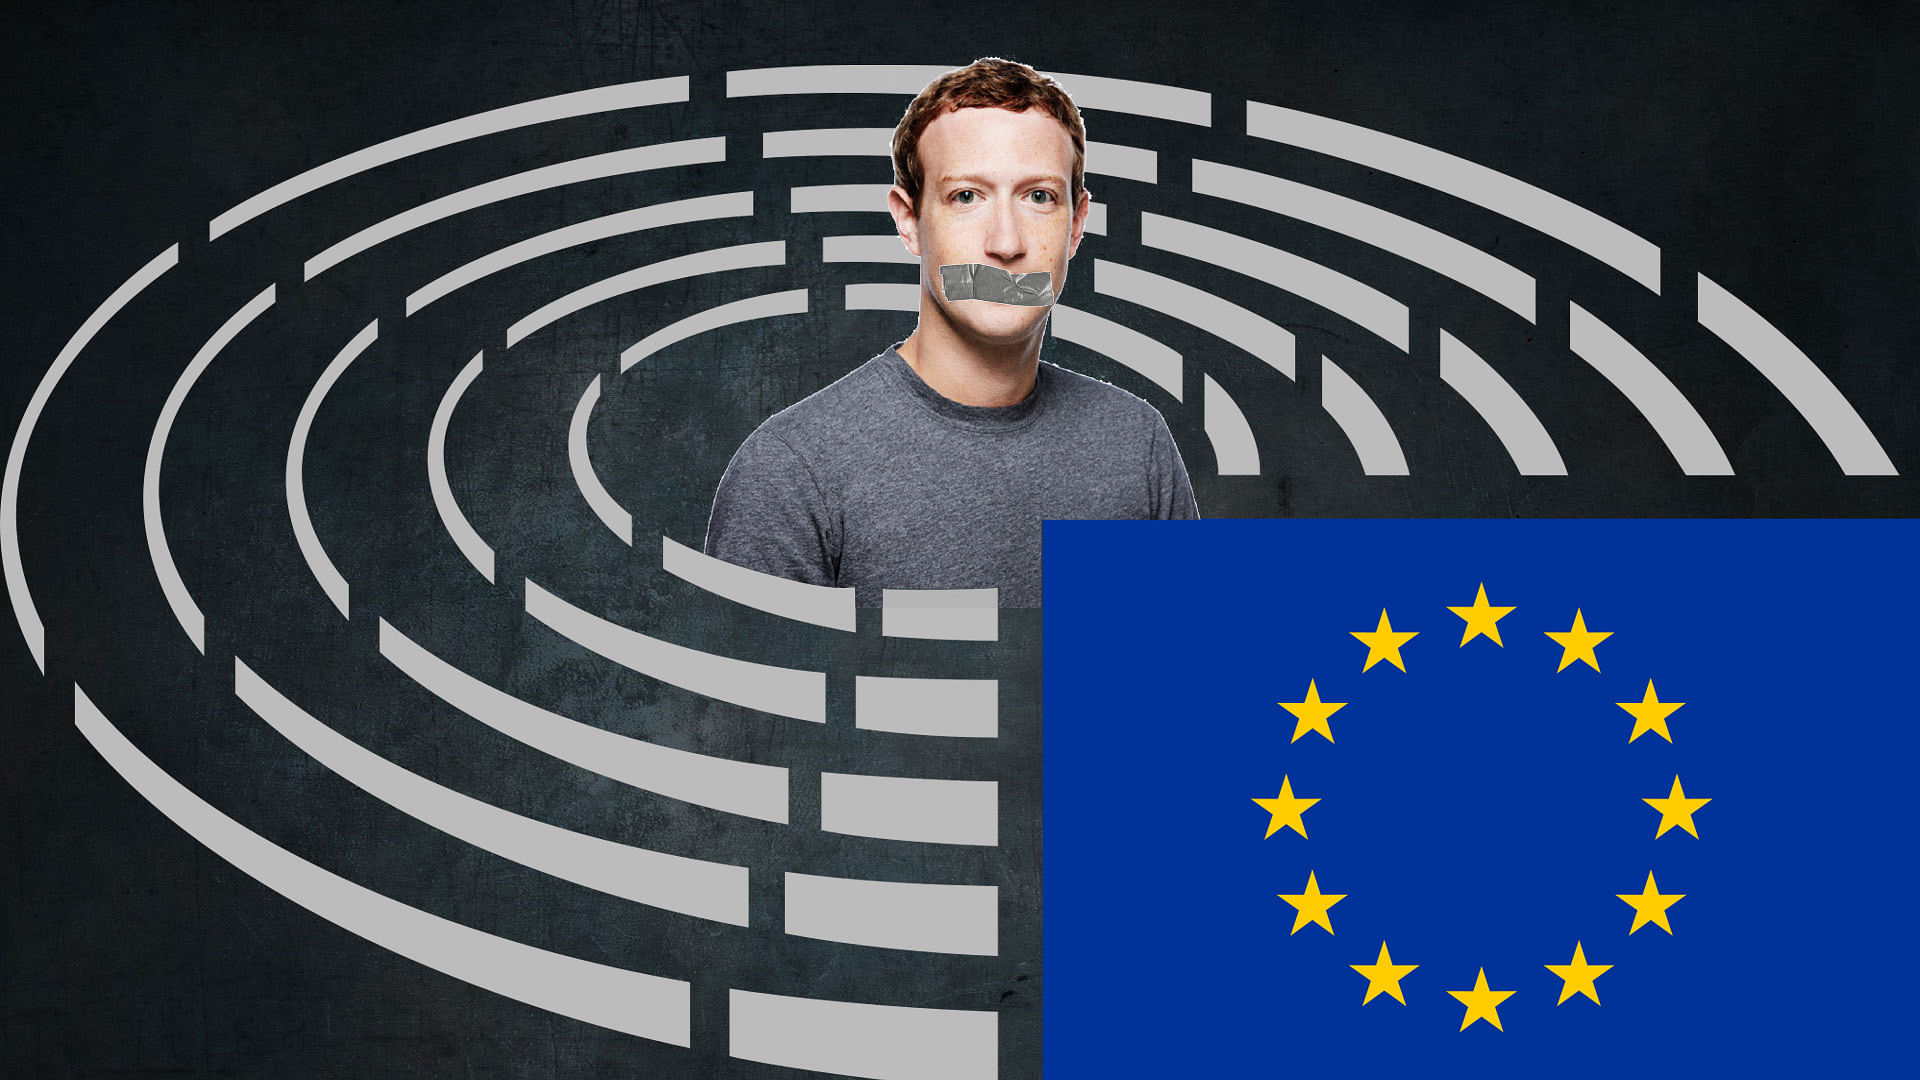 Mark Zuckerberg testified in front of the European Parliment